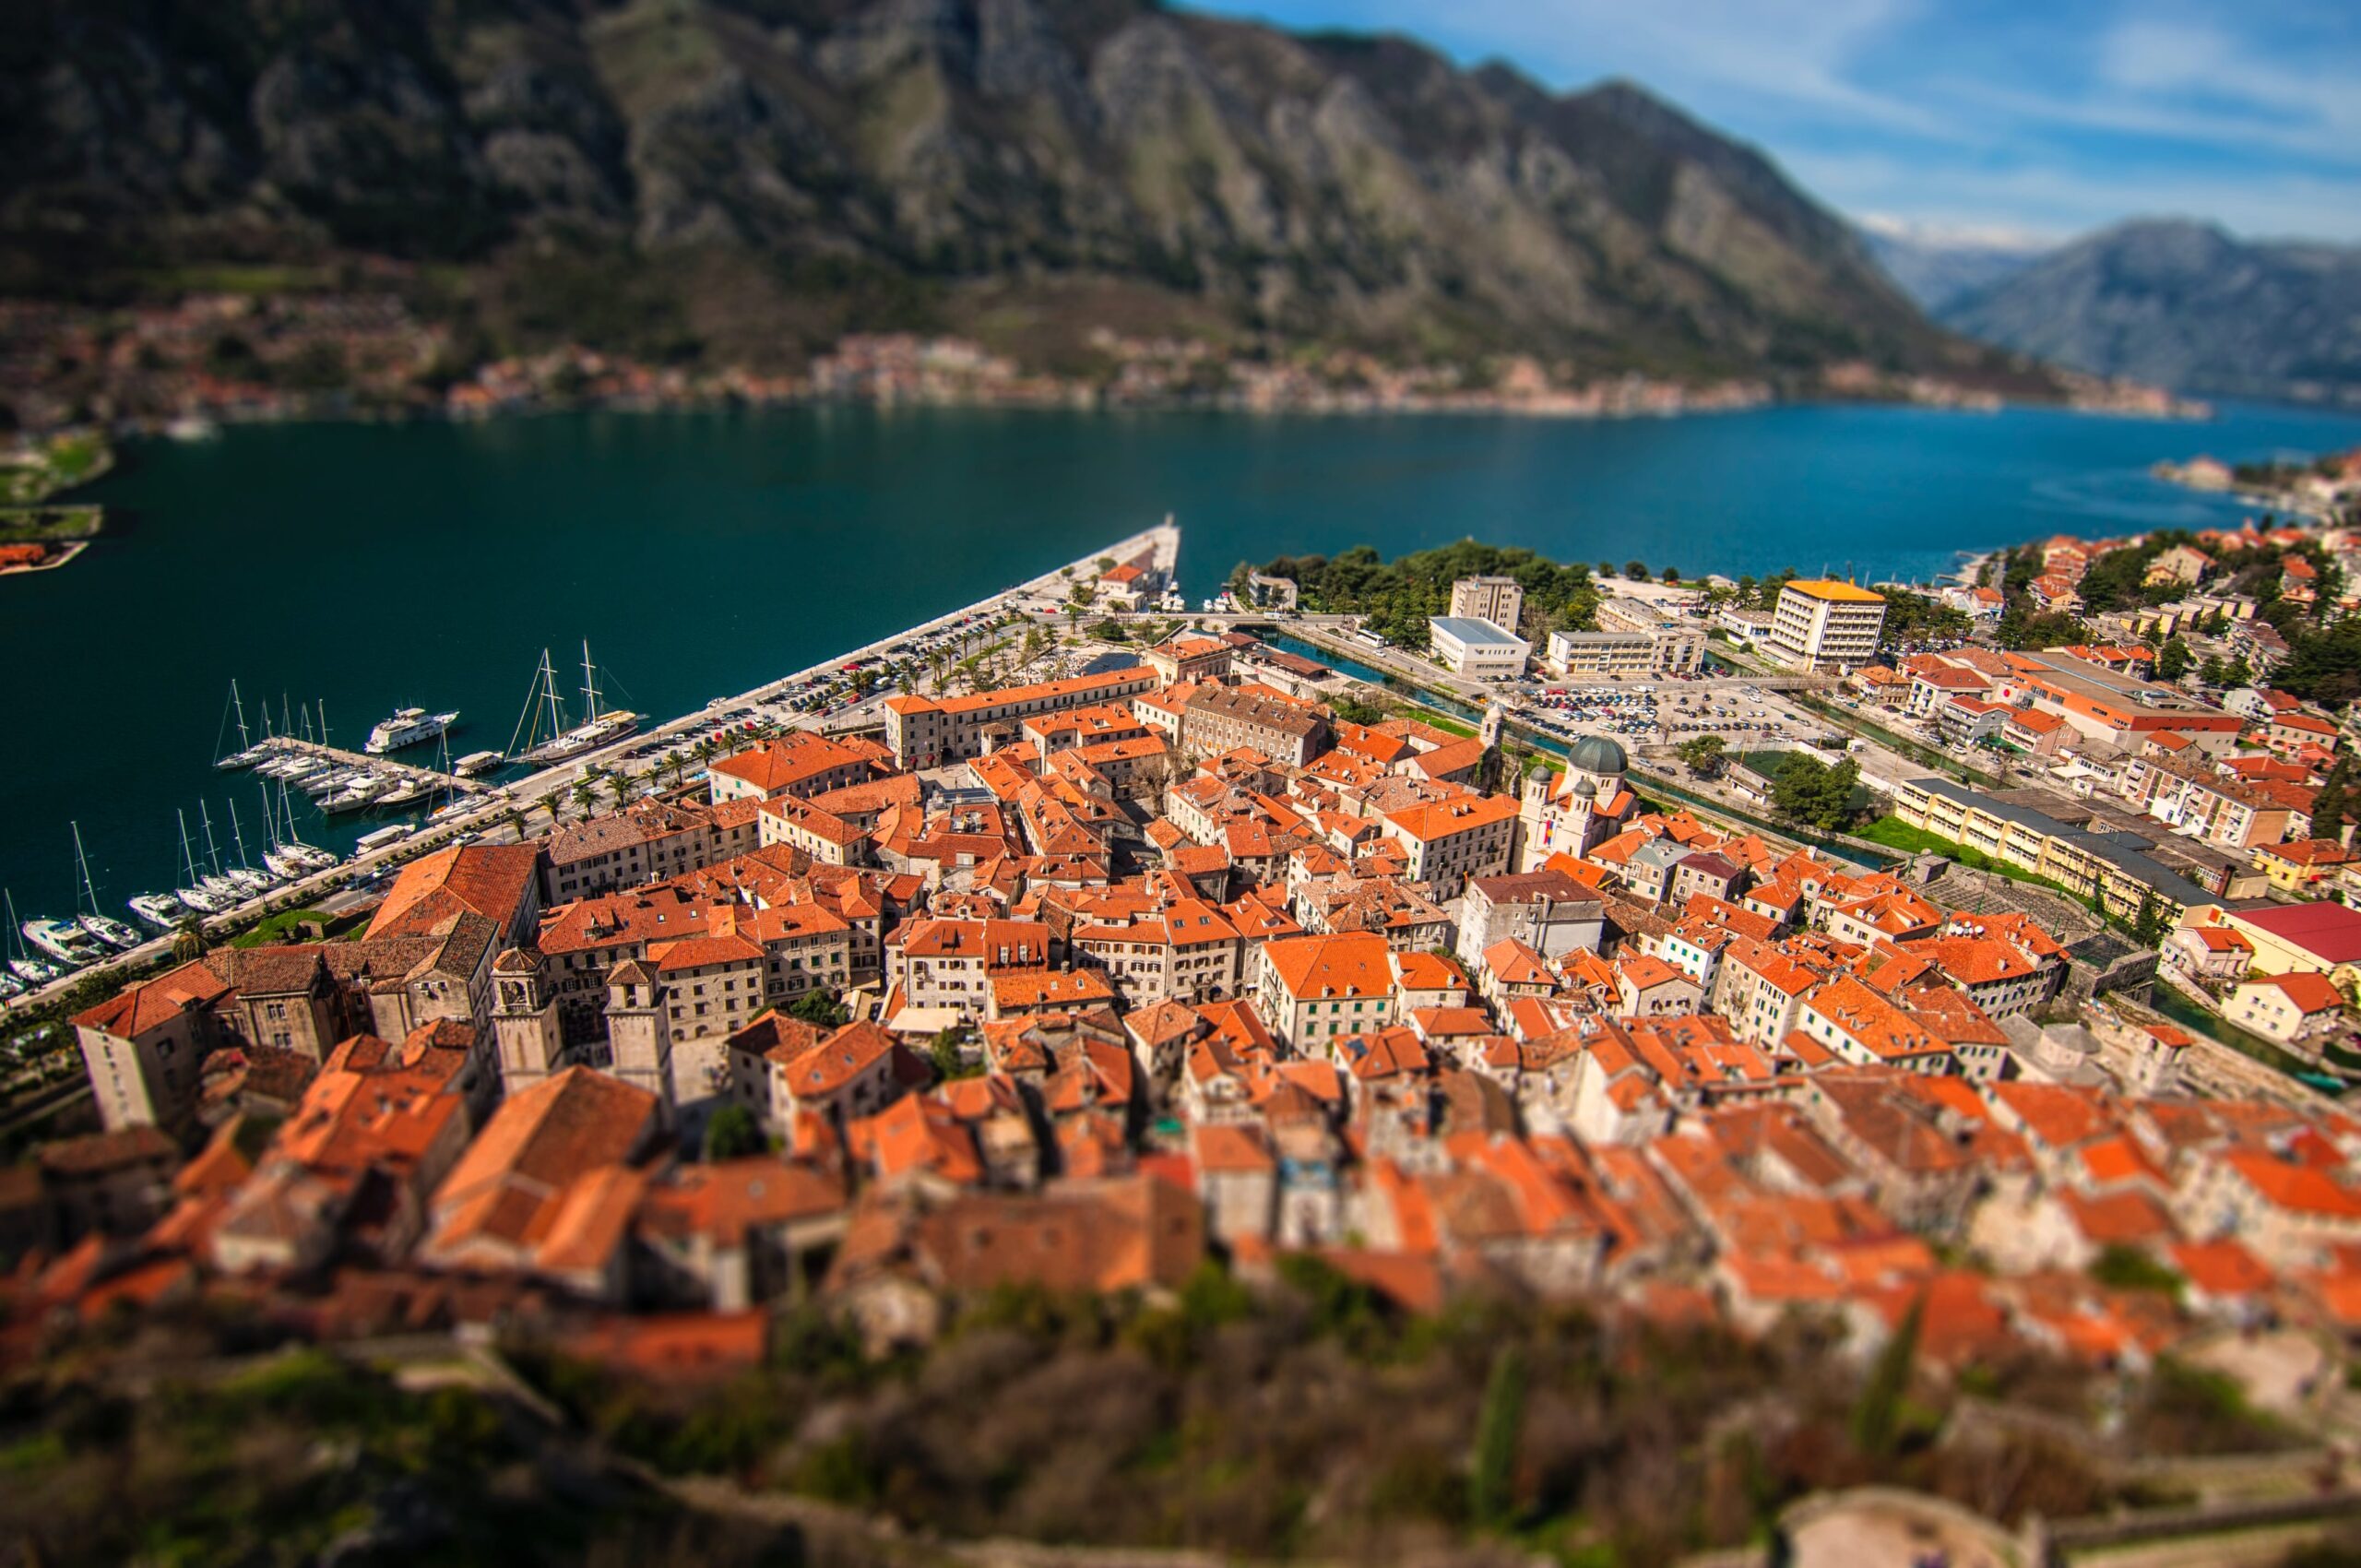 Kotor, Montenegro, Love at first sight!